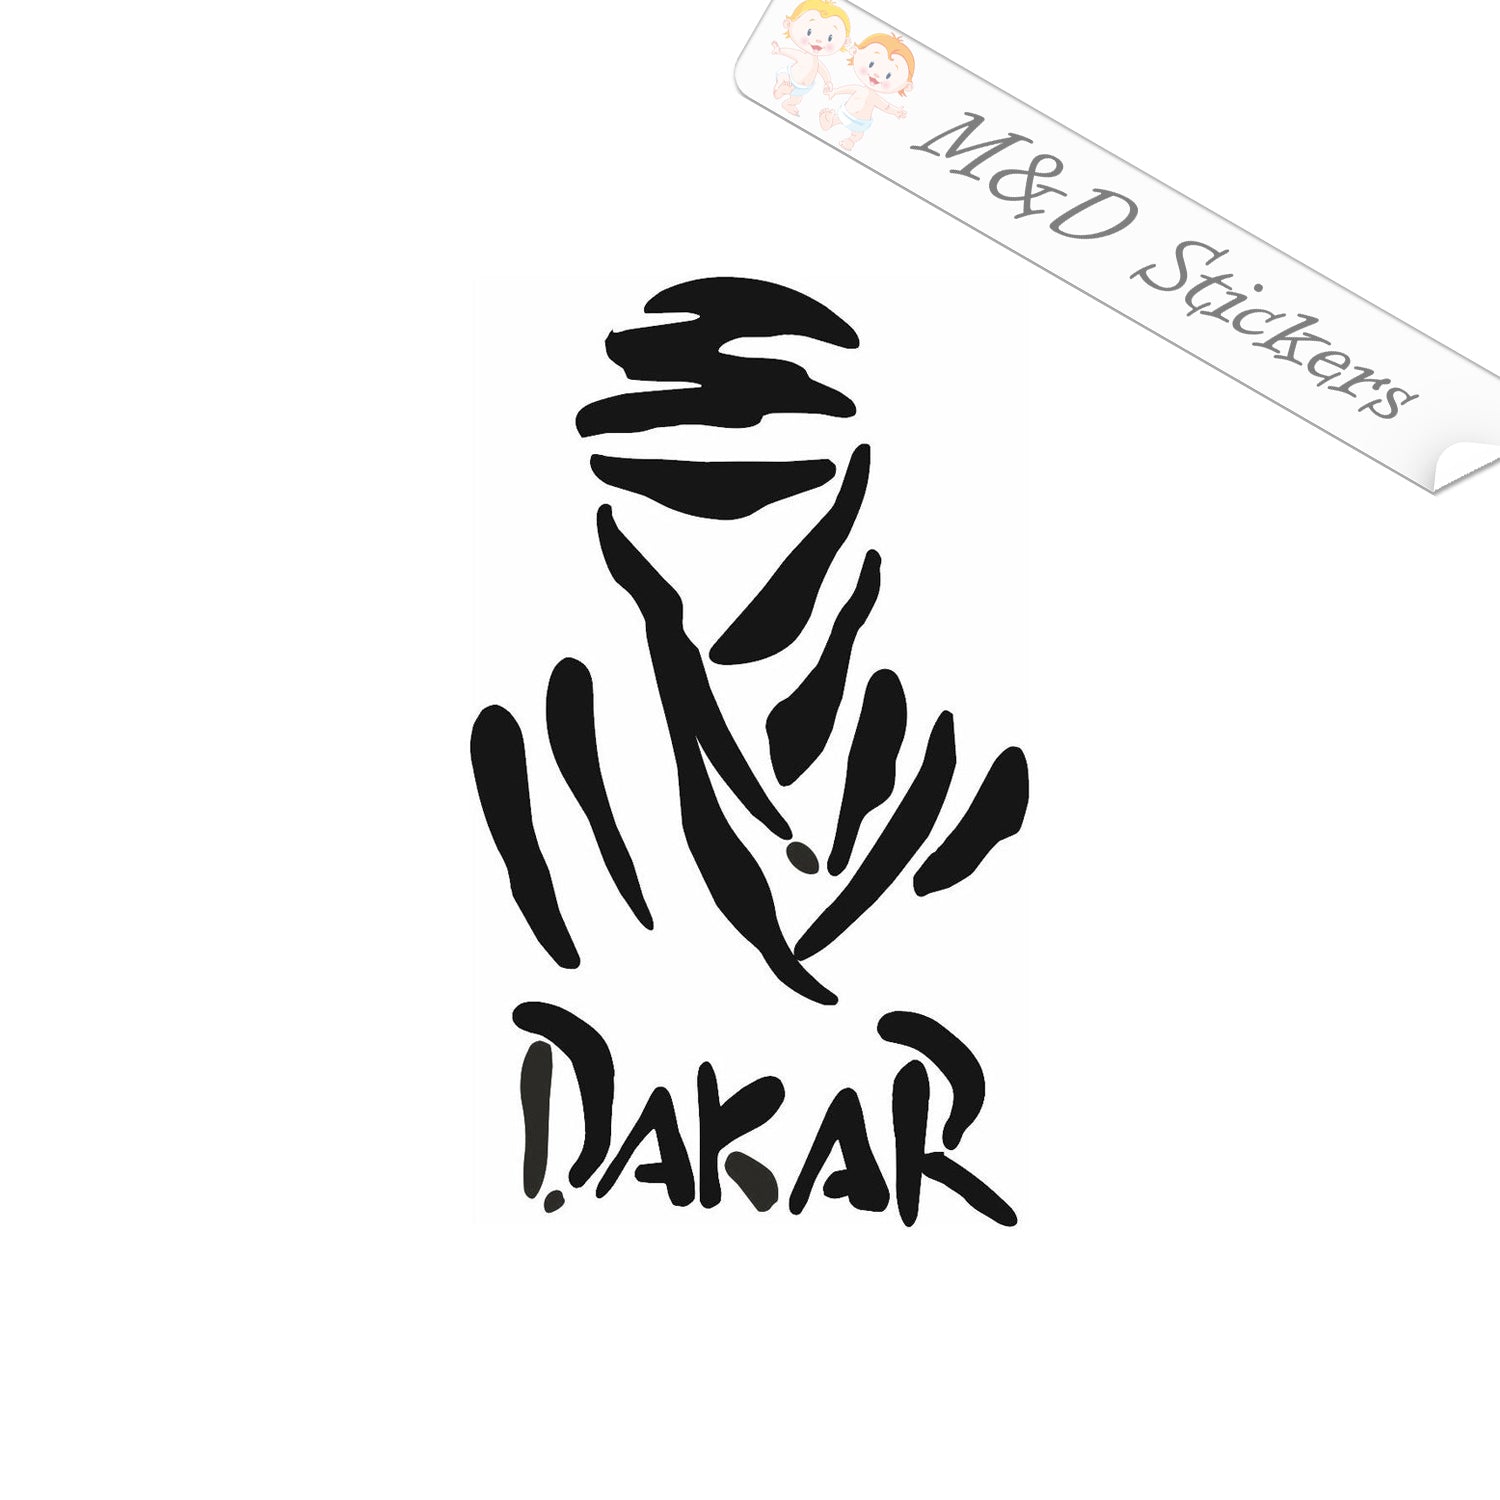 dakar vinyl car sticker, decal, window oracal 651